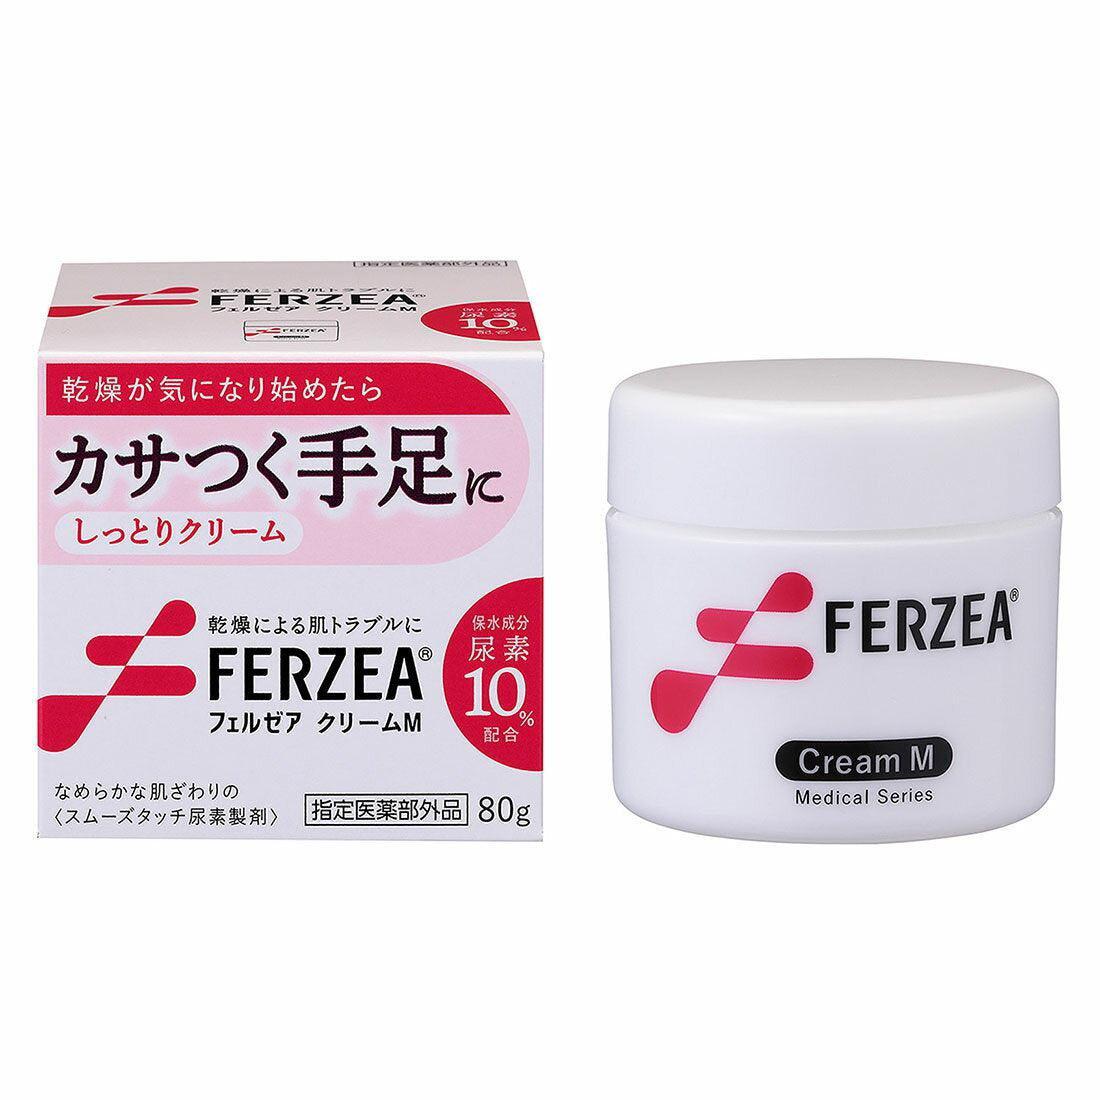 P-1-SHI-FER-BC-80-Ferzea Urea Cream for Dry and Rough Skin 80g.jpg